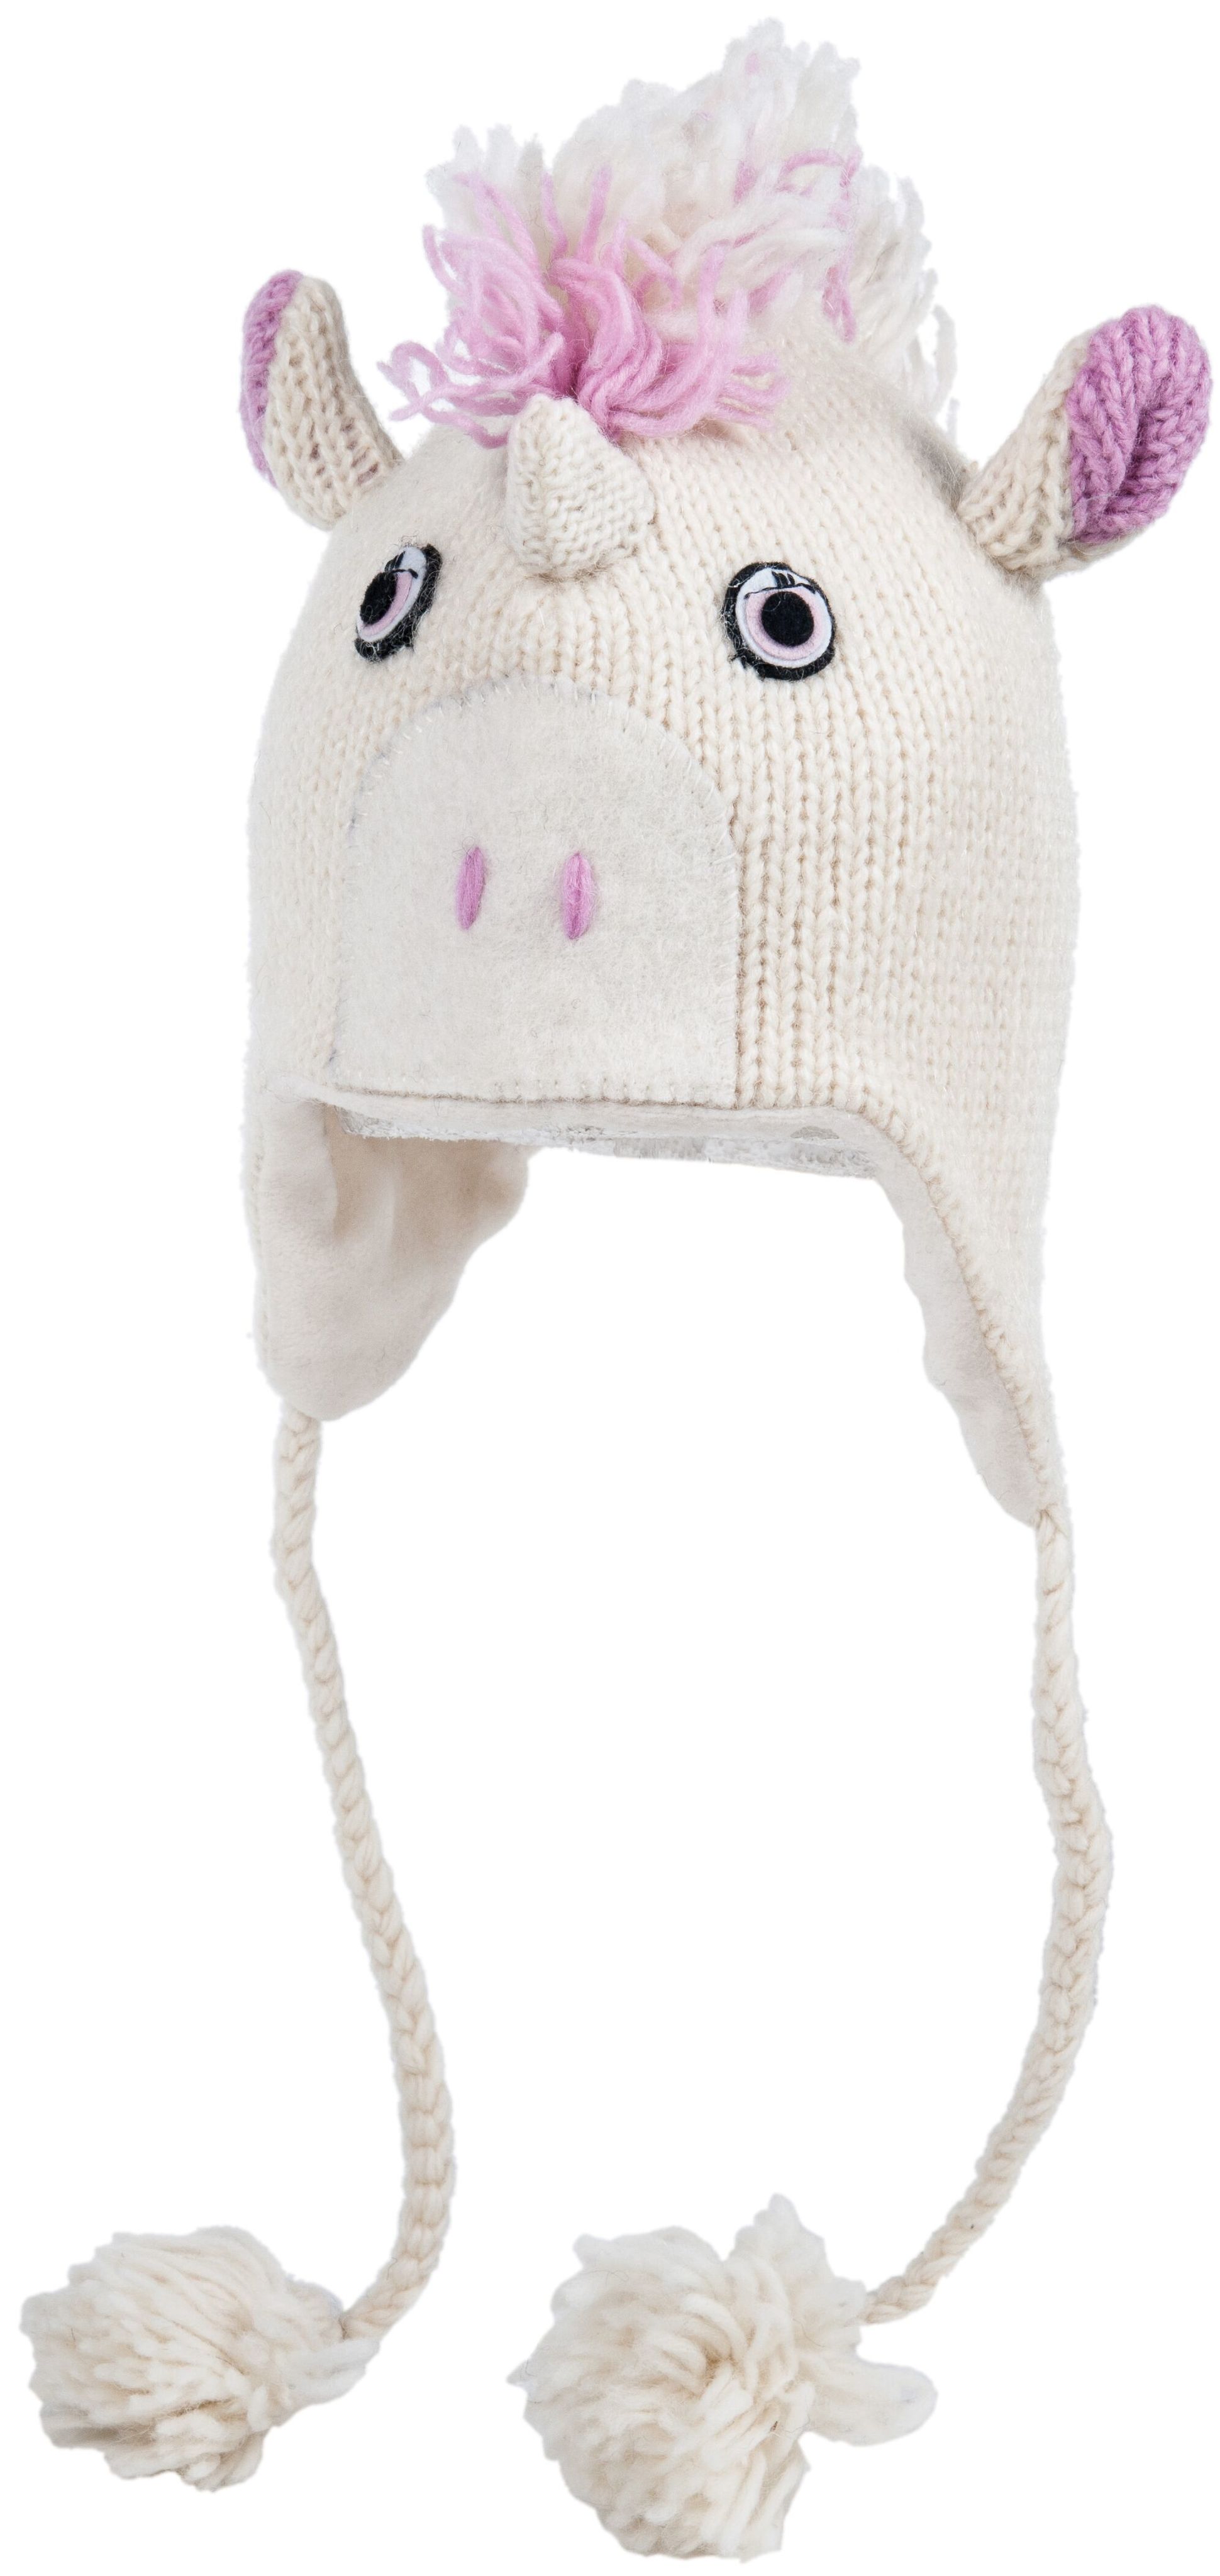 cute unicorn knitted hat